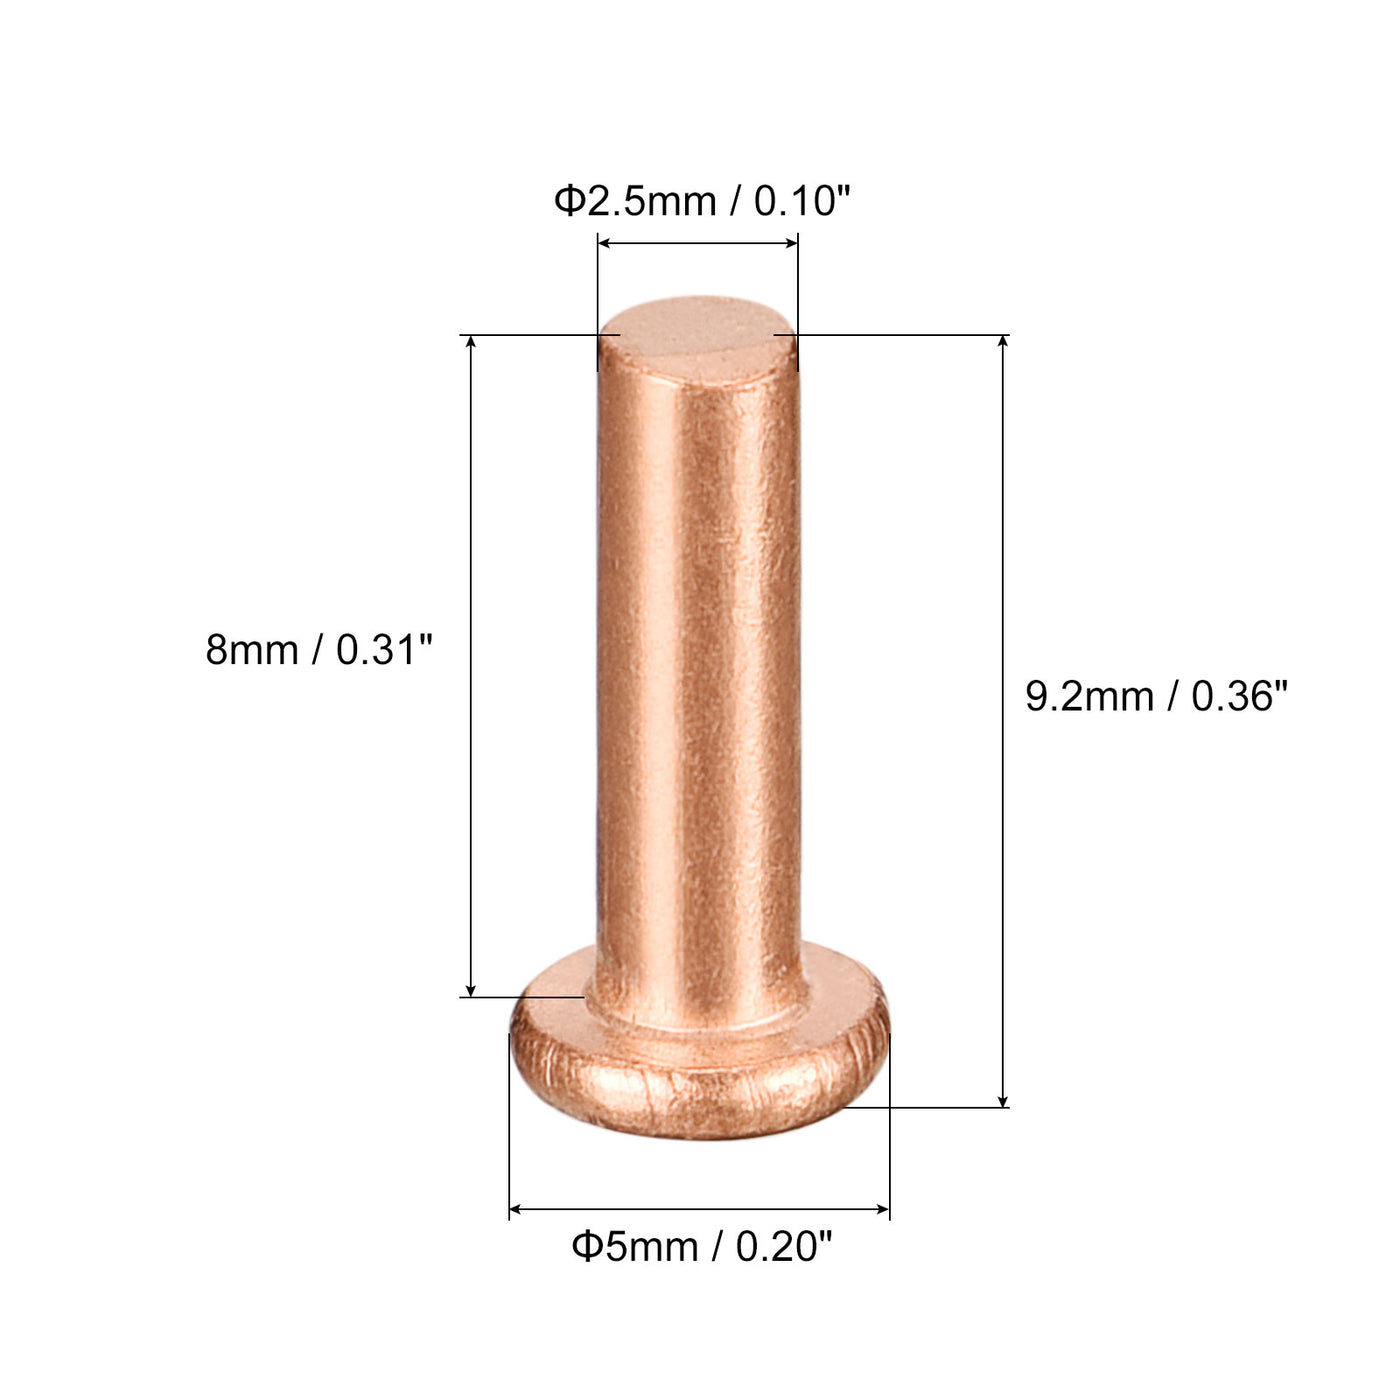 uxcell Uxcell 50Pcs 2.5mm Dia x 8mm L Shank Flat Head Copper Solid Rivets Fastener Copper Tone